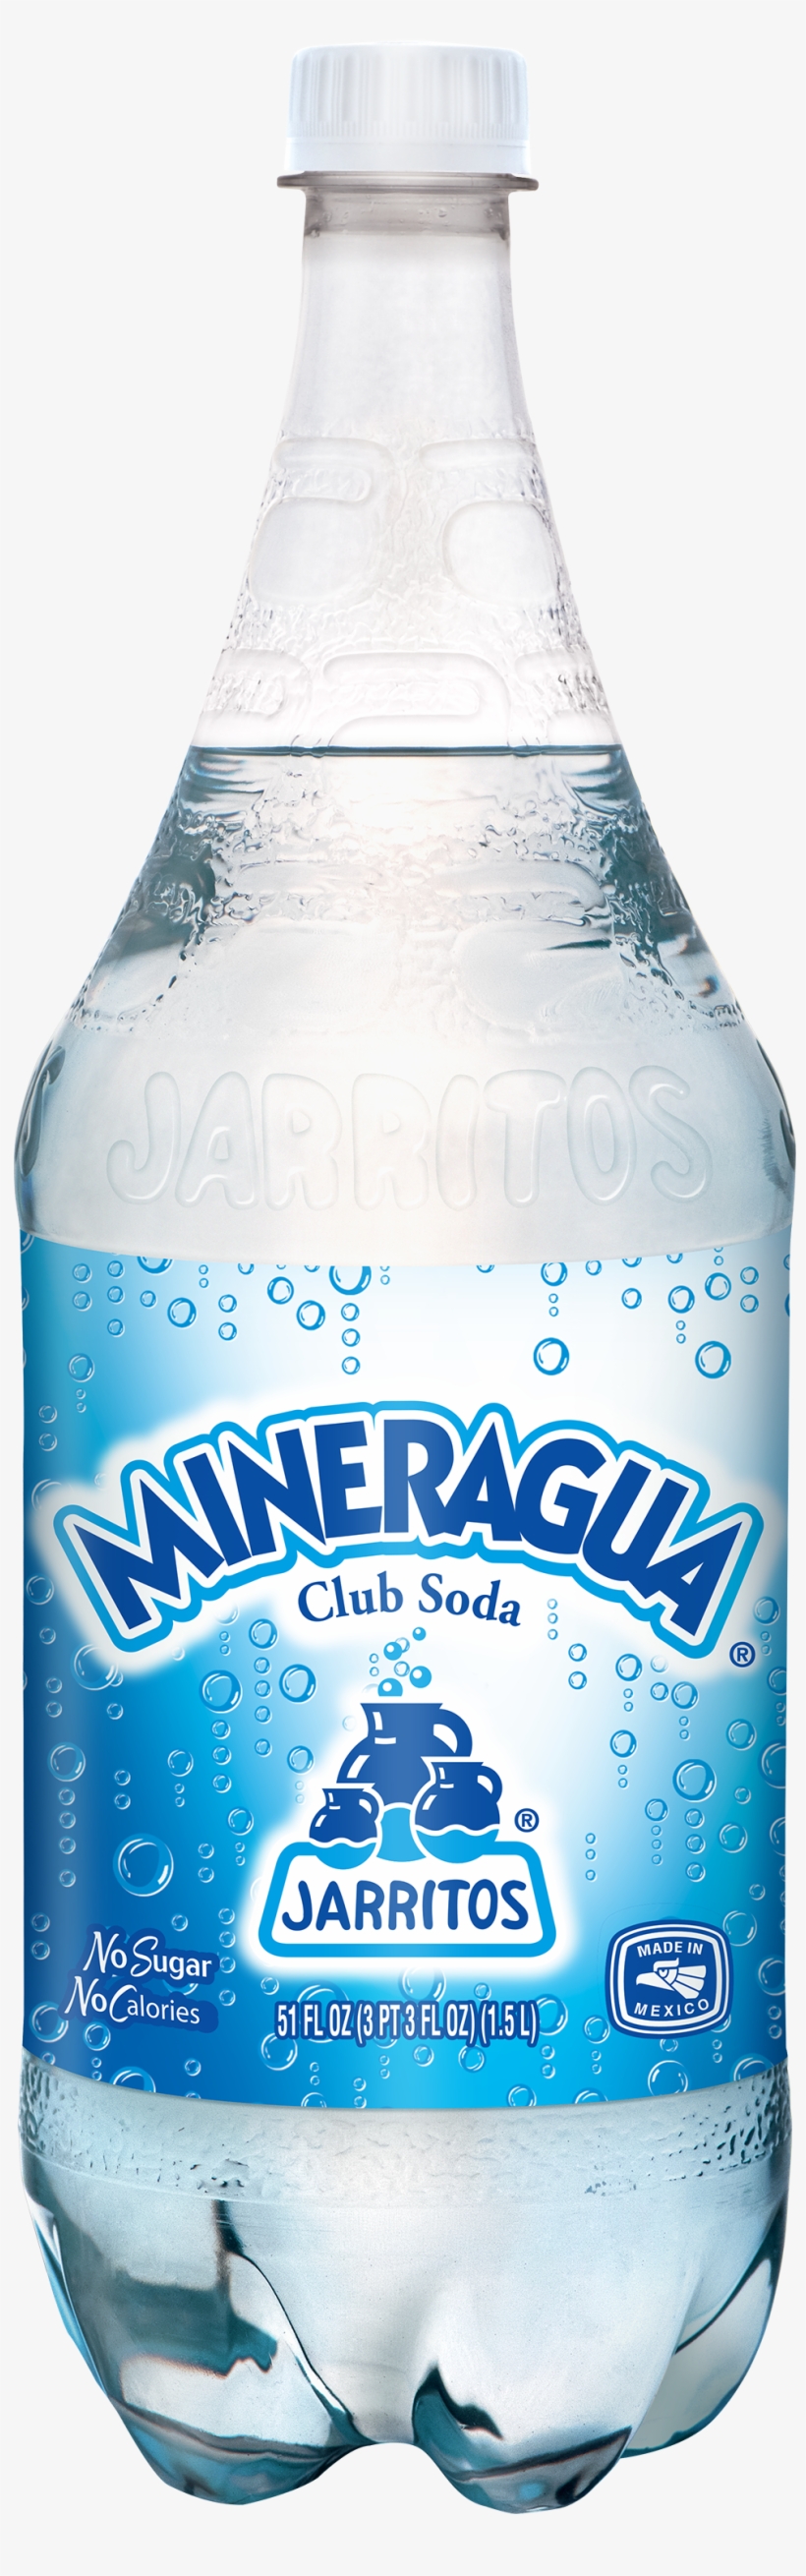 Upc - Jarritos Mineragua Club Soda - 12 Pack, 12.5 Fl Oz, transparent png #1876341